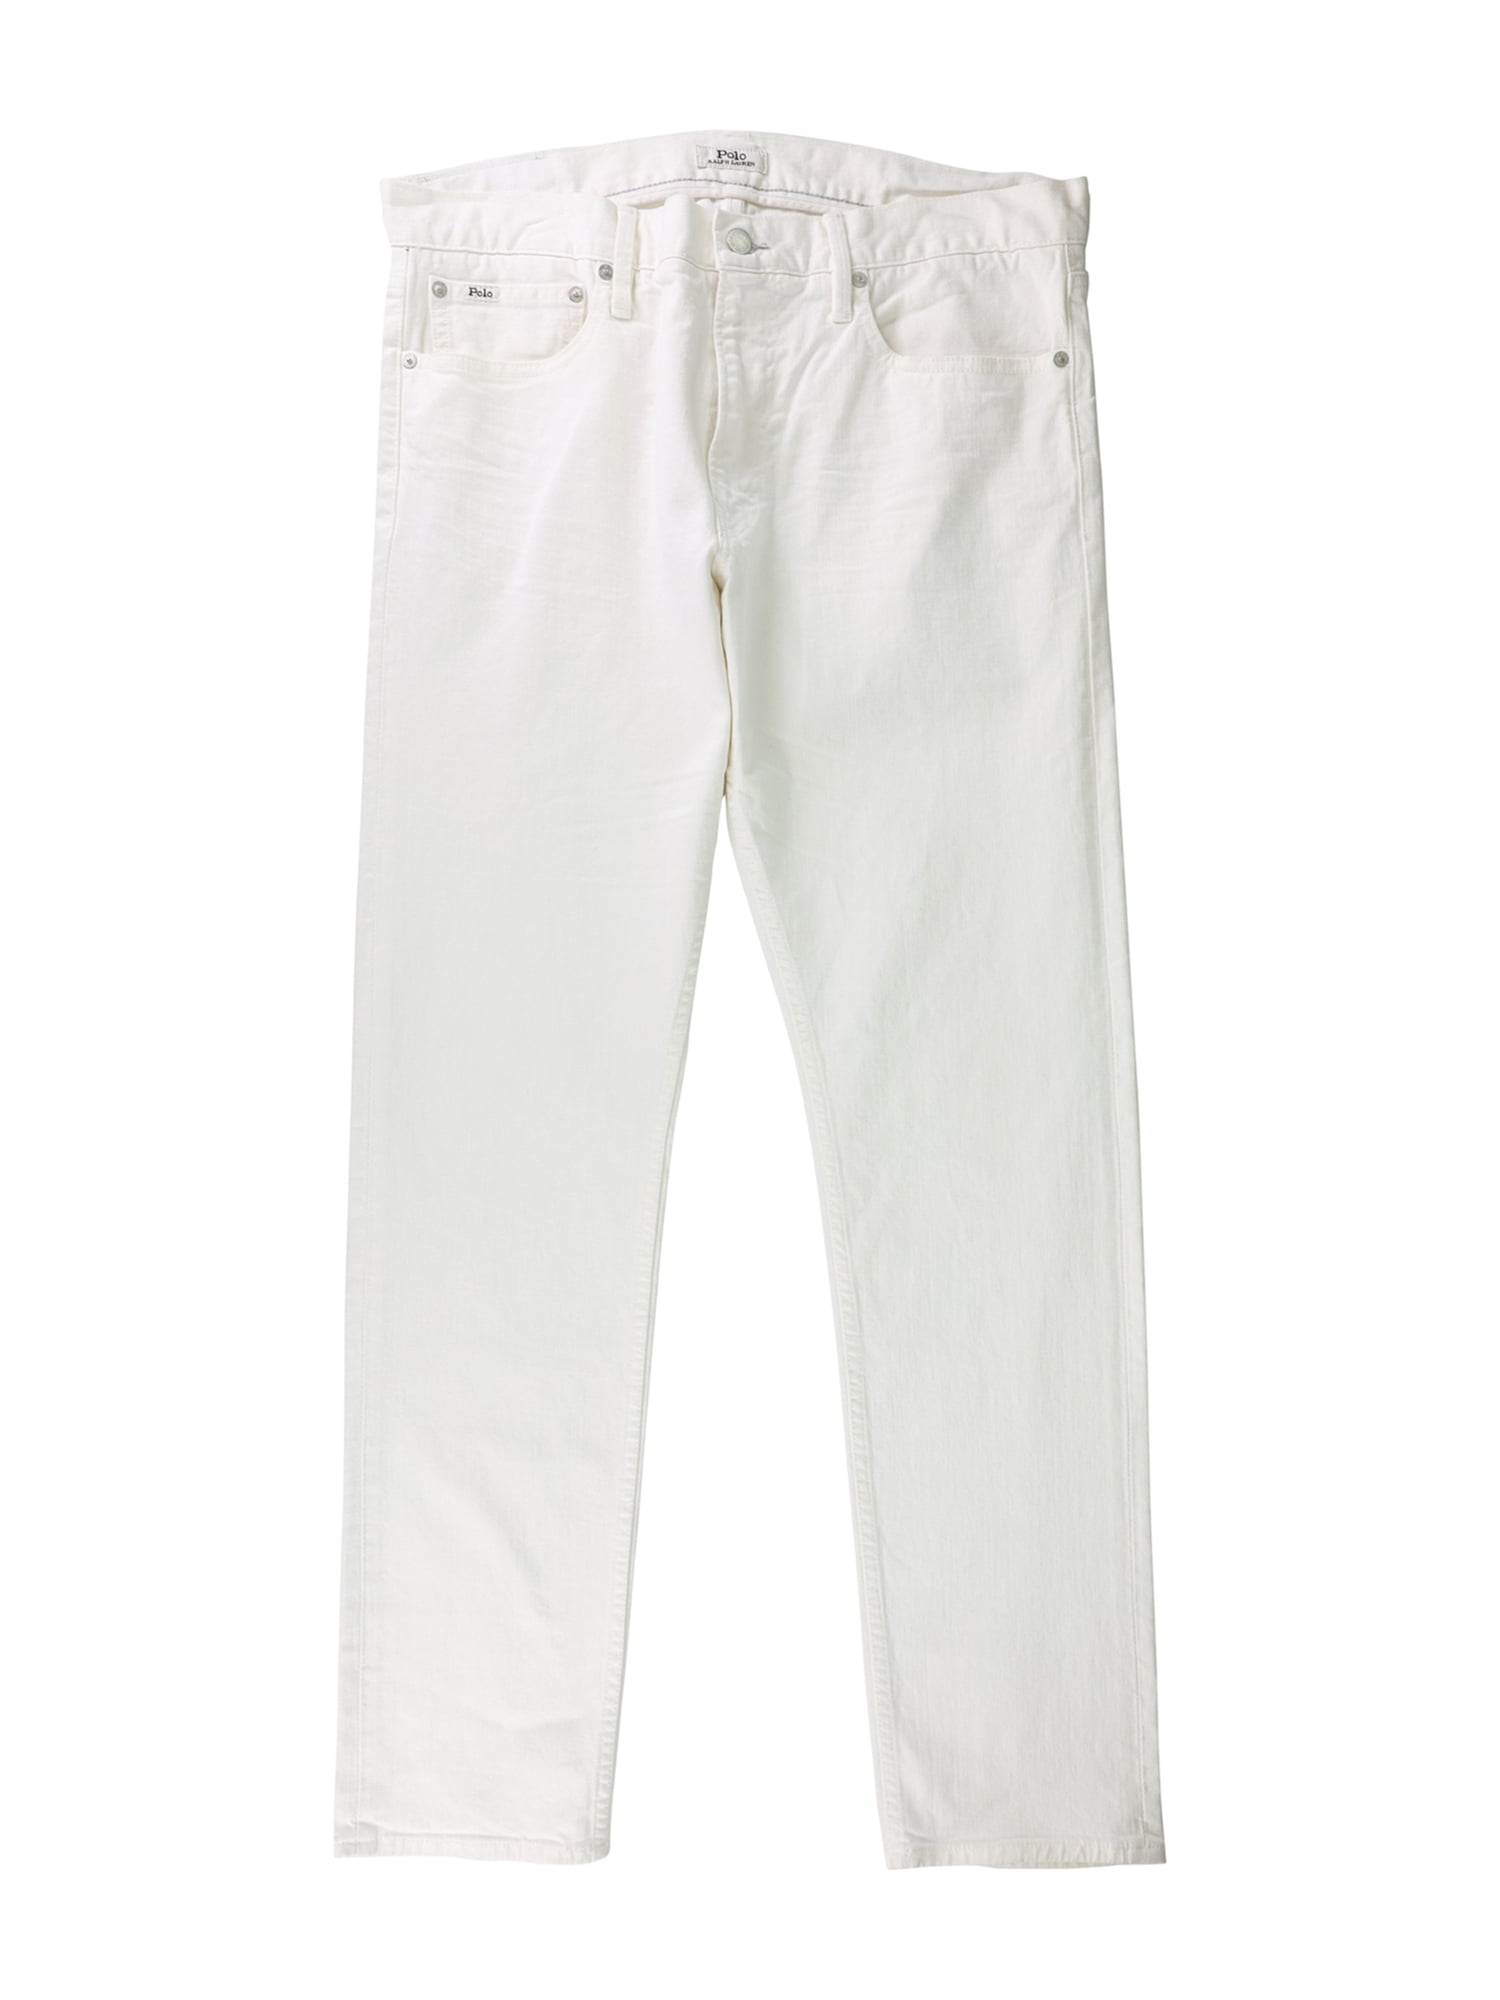 Ralph Lauren Mens Sullivan Relaxed Jeans white 32x30 | Walmart Canada